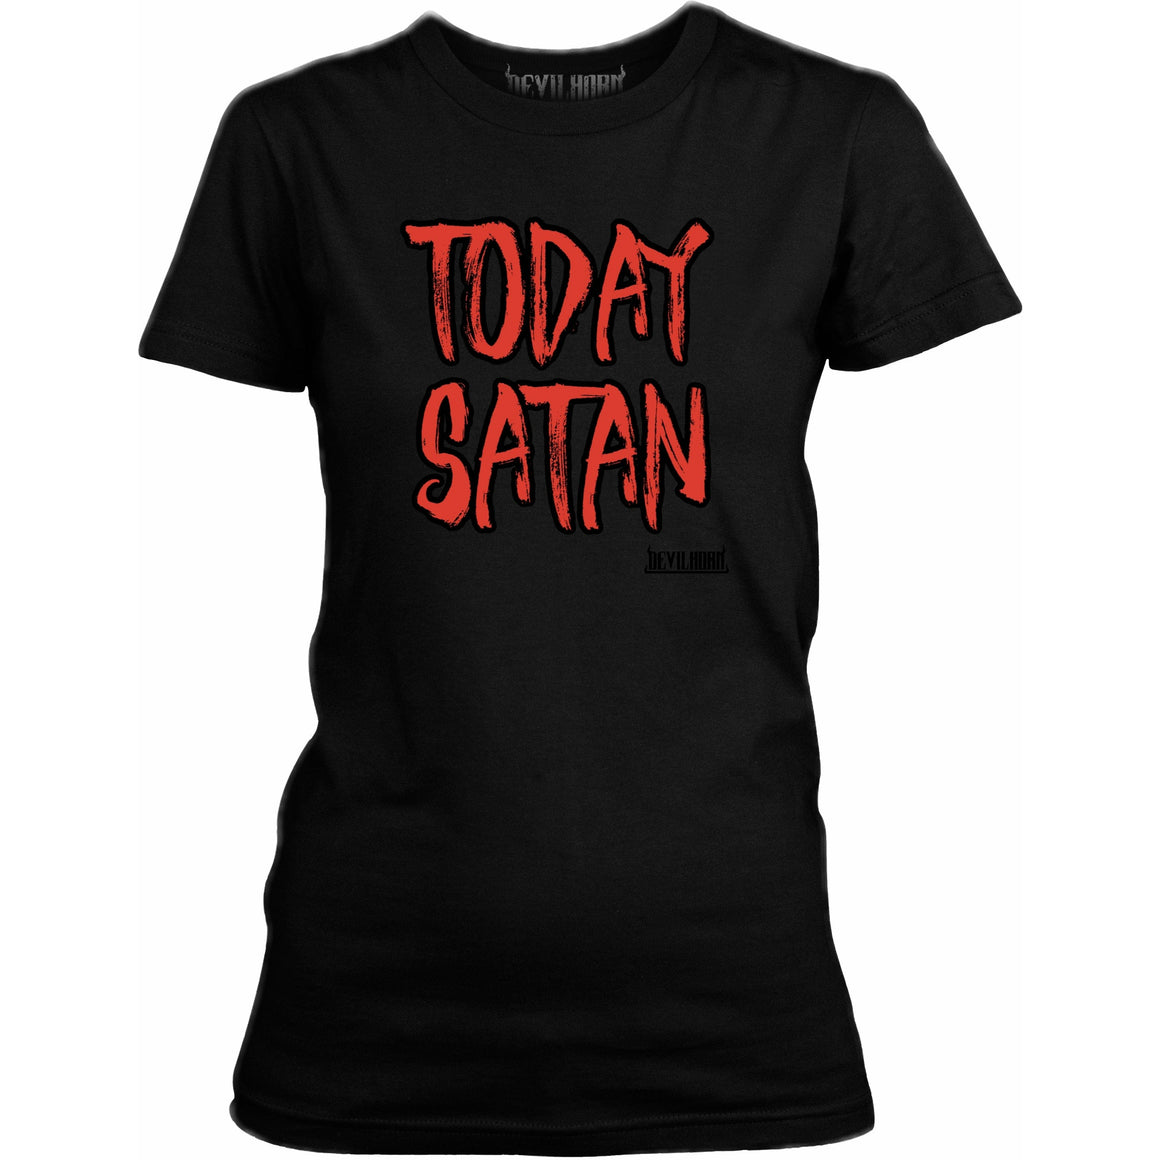 TODAY SATAN ladies t shirt - DEVILHORN